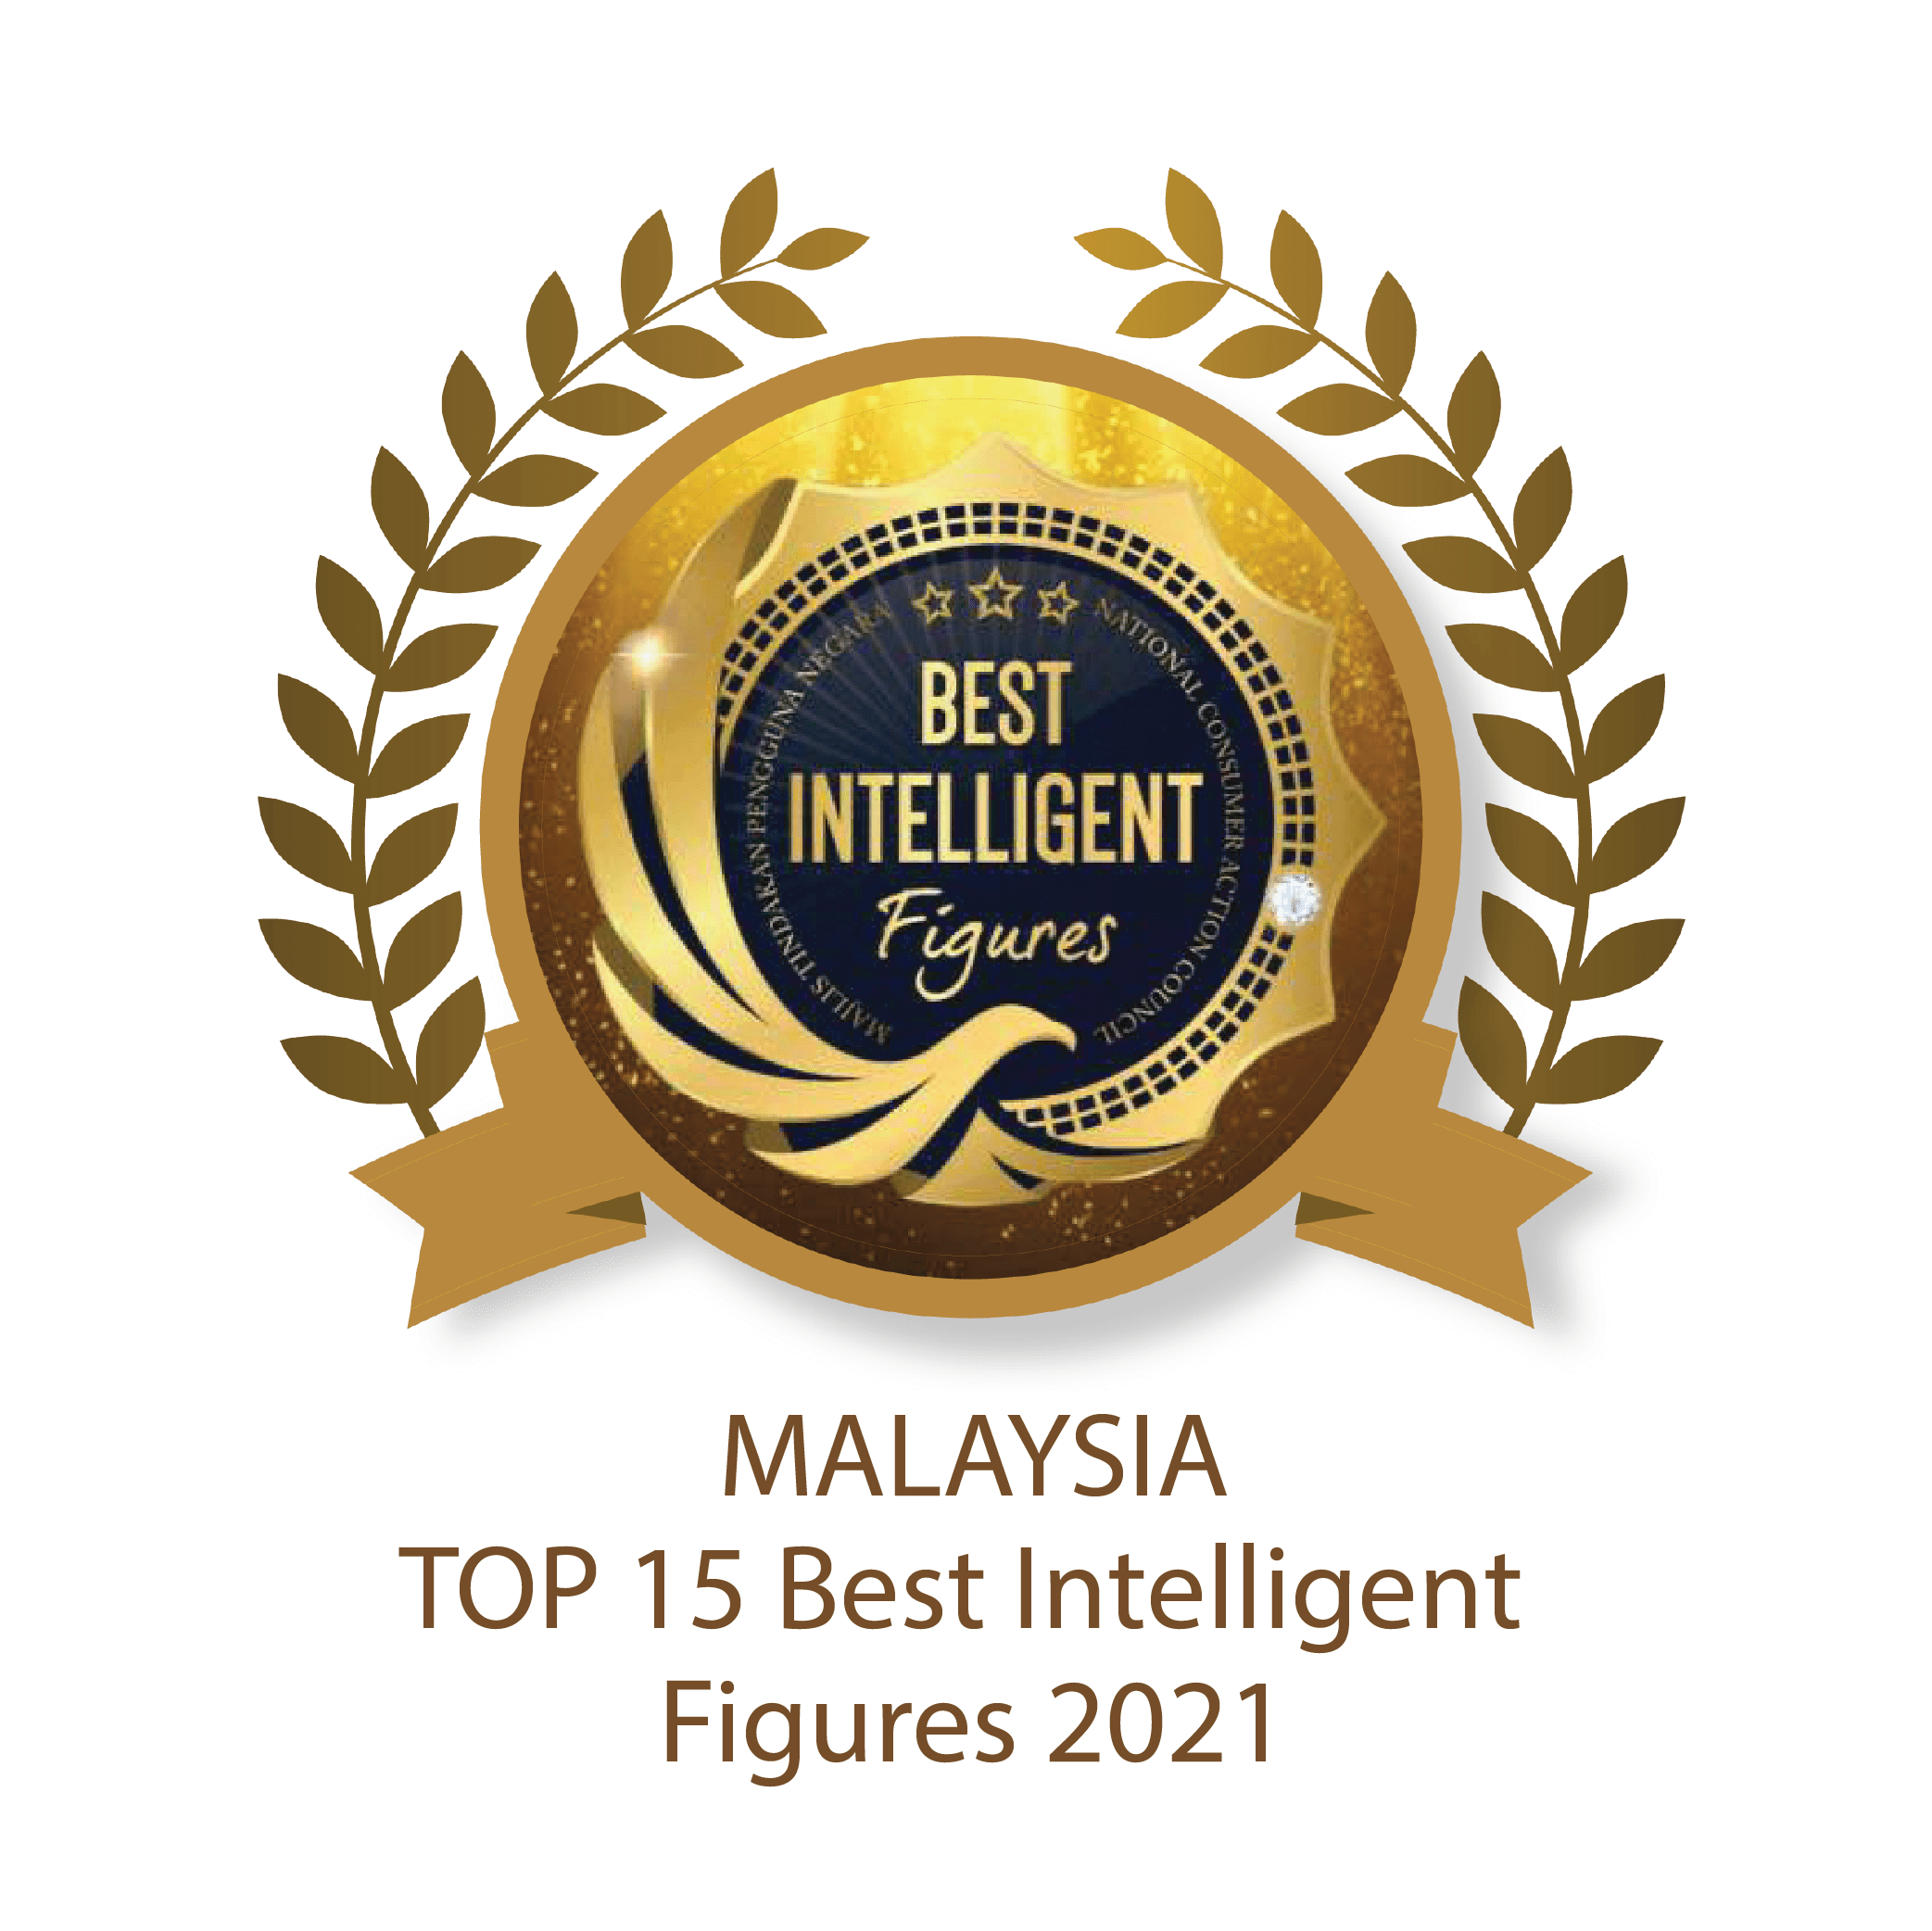 malaysia-top-15-best-intelligent-figures-2021-awards-beacon-hospital-malaysia